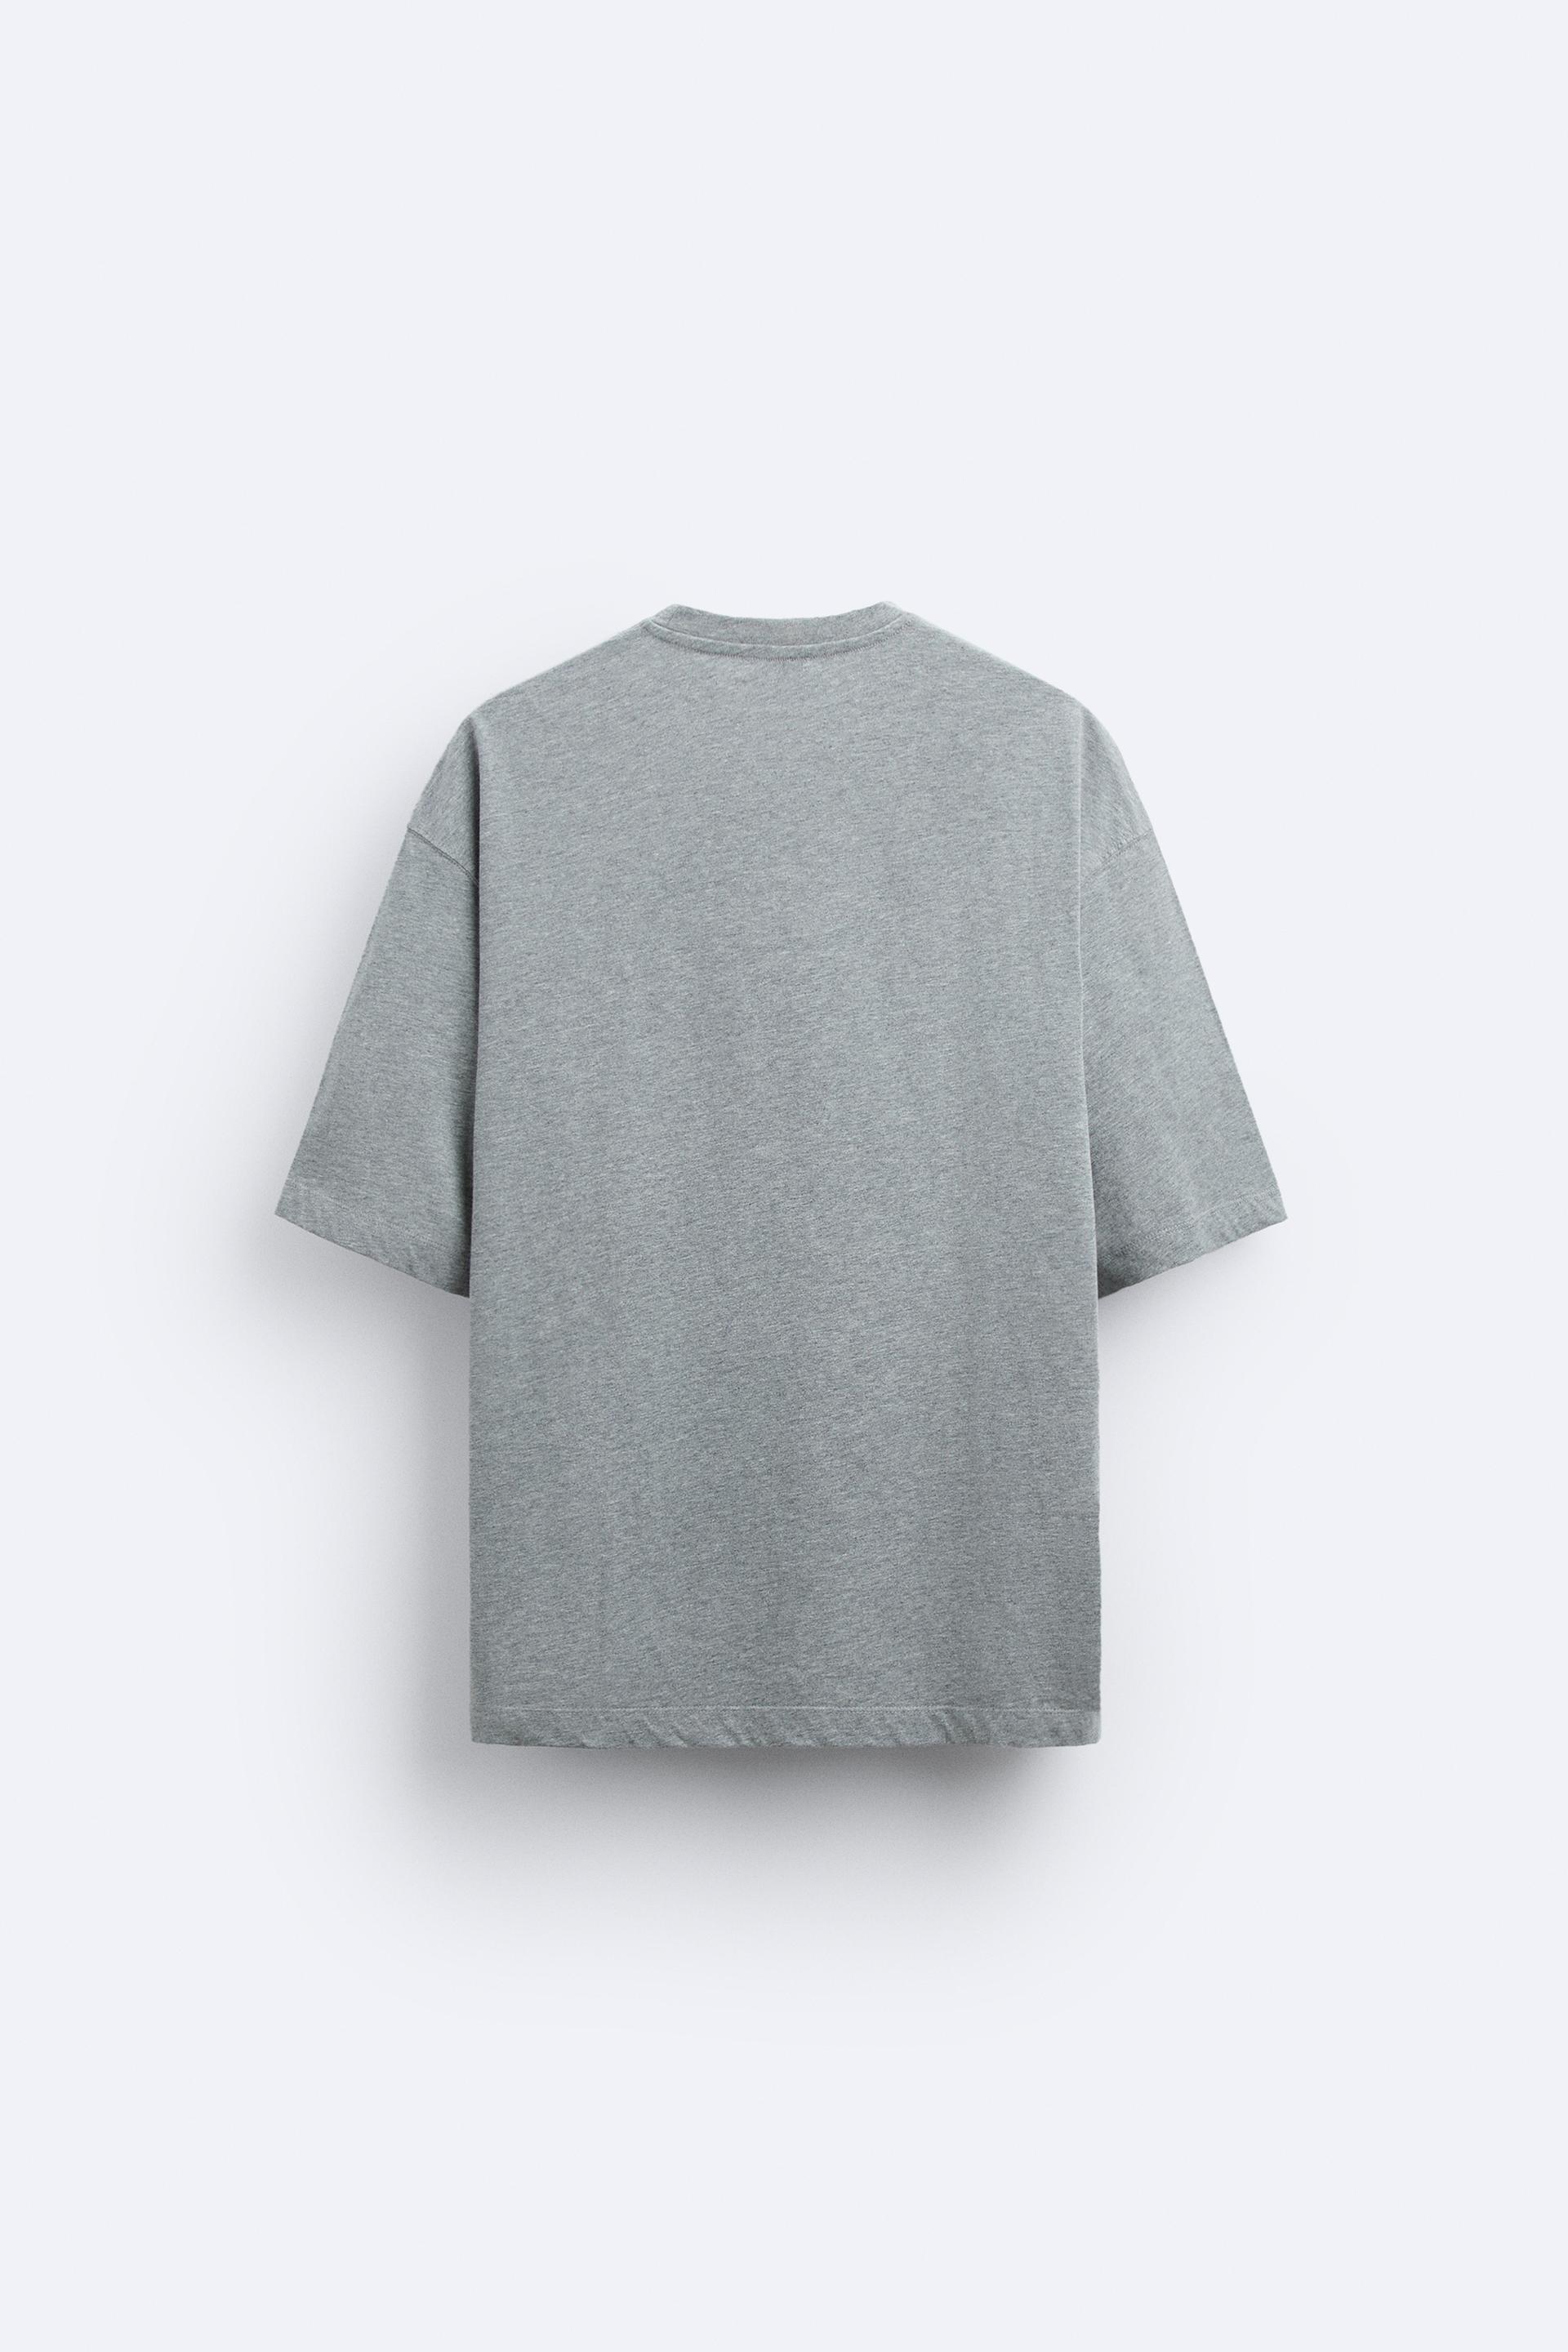 Esmara Women's T-Shirt L Grey Cotton with Elastane, Polyester Basic